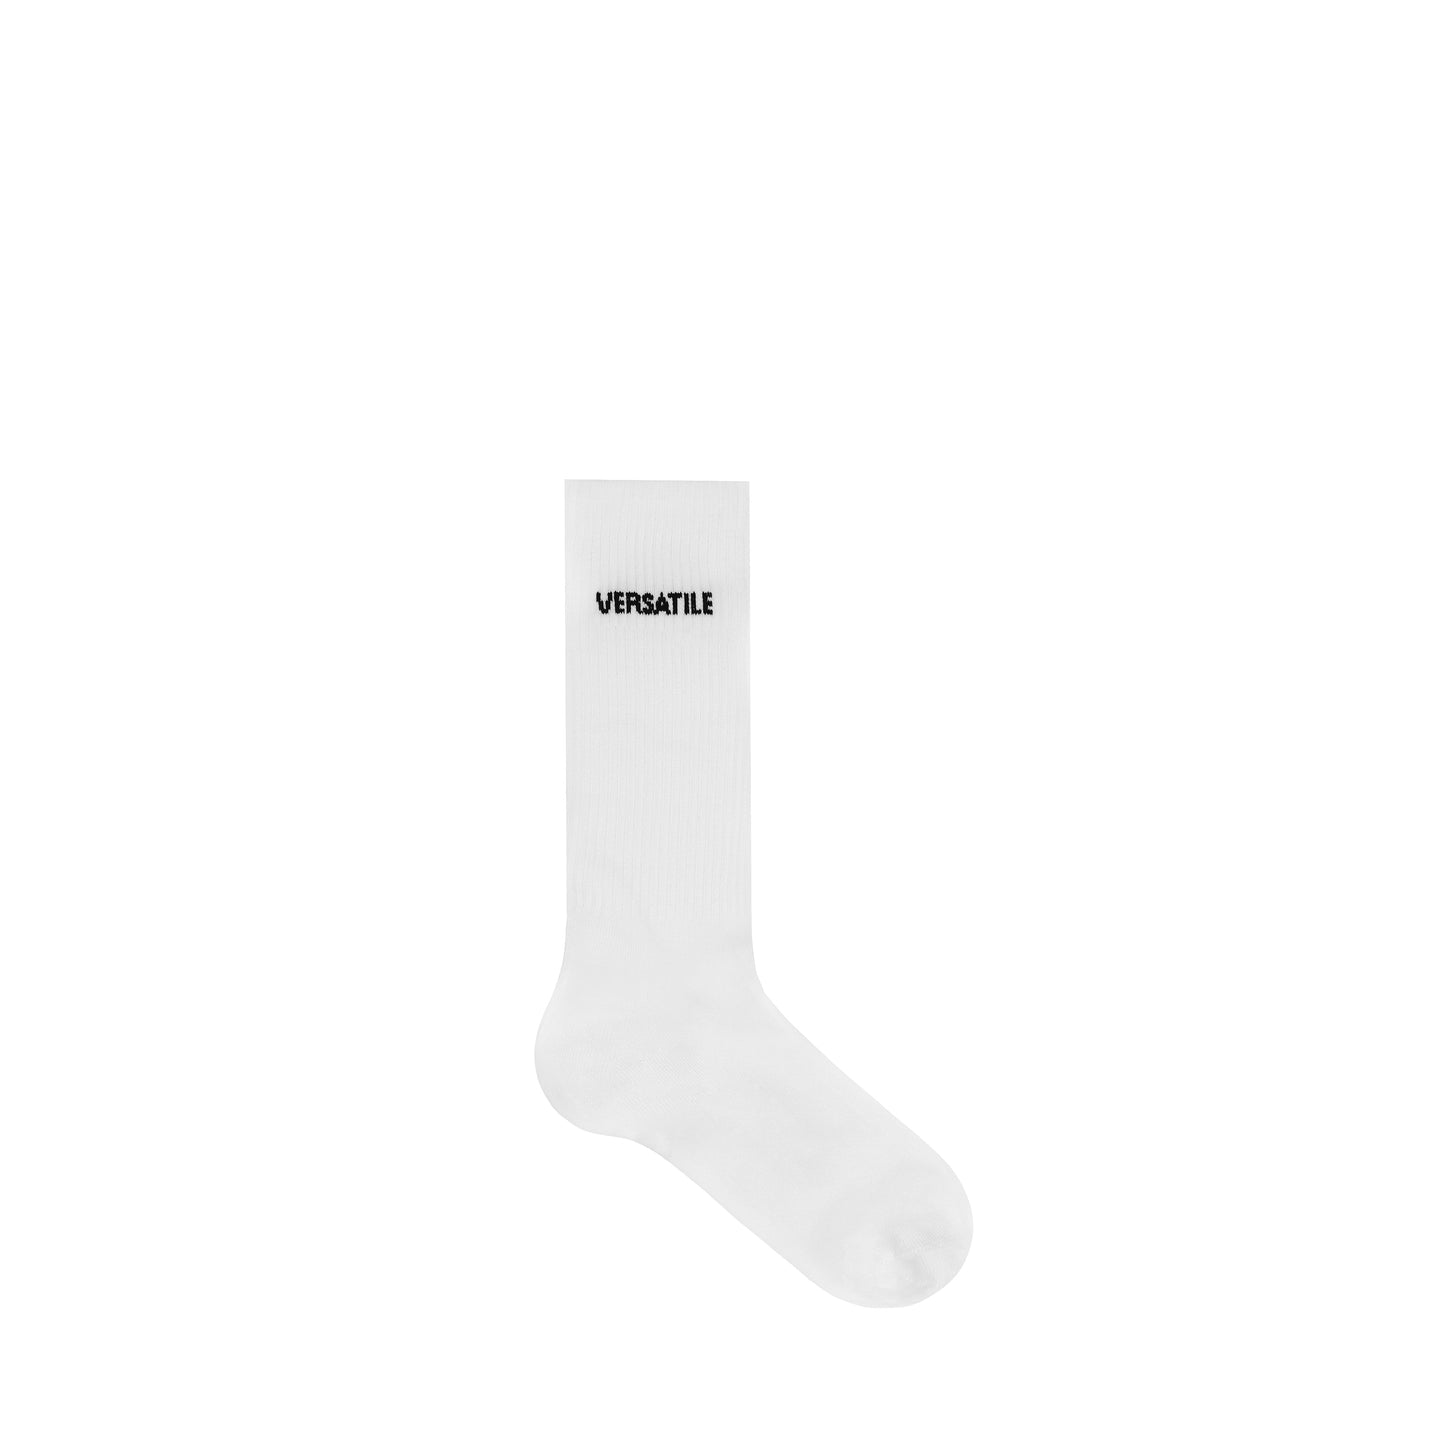 untitled#08 Socks (Versatile White)